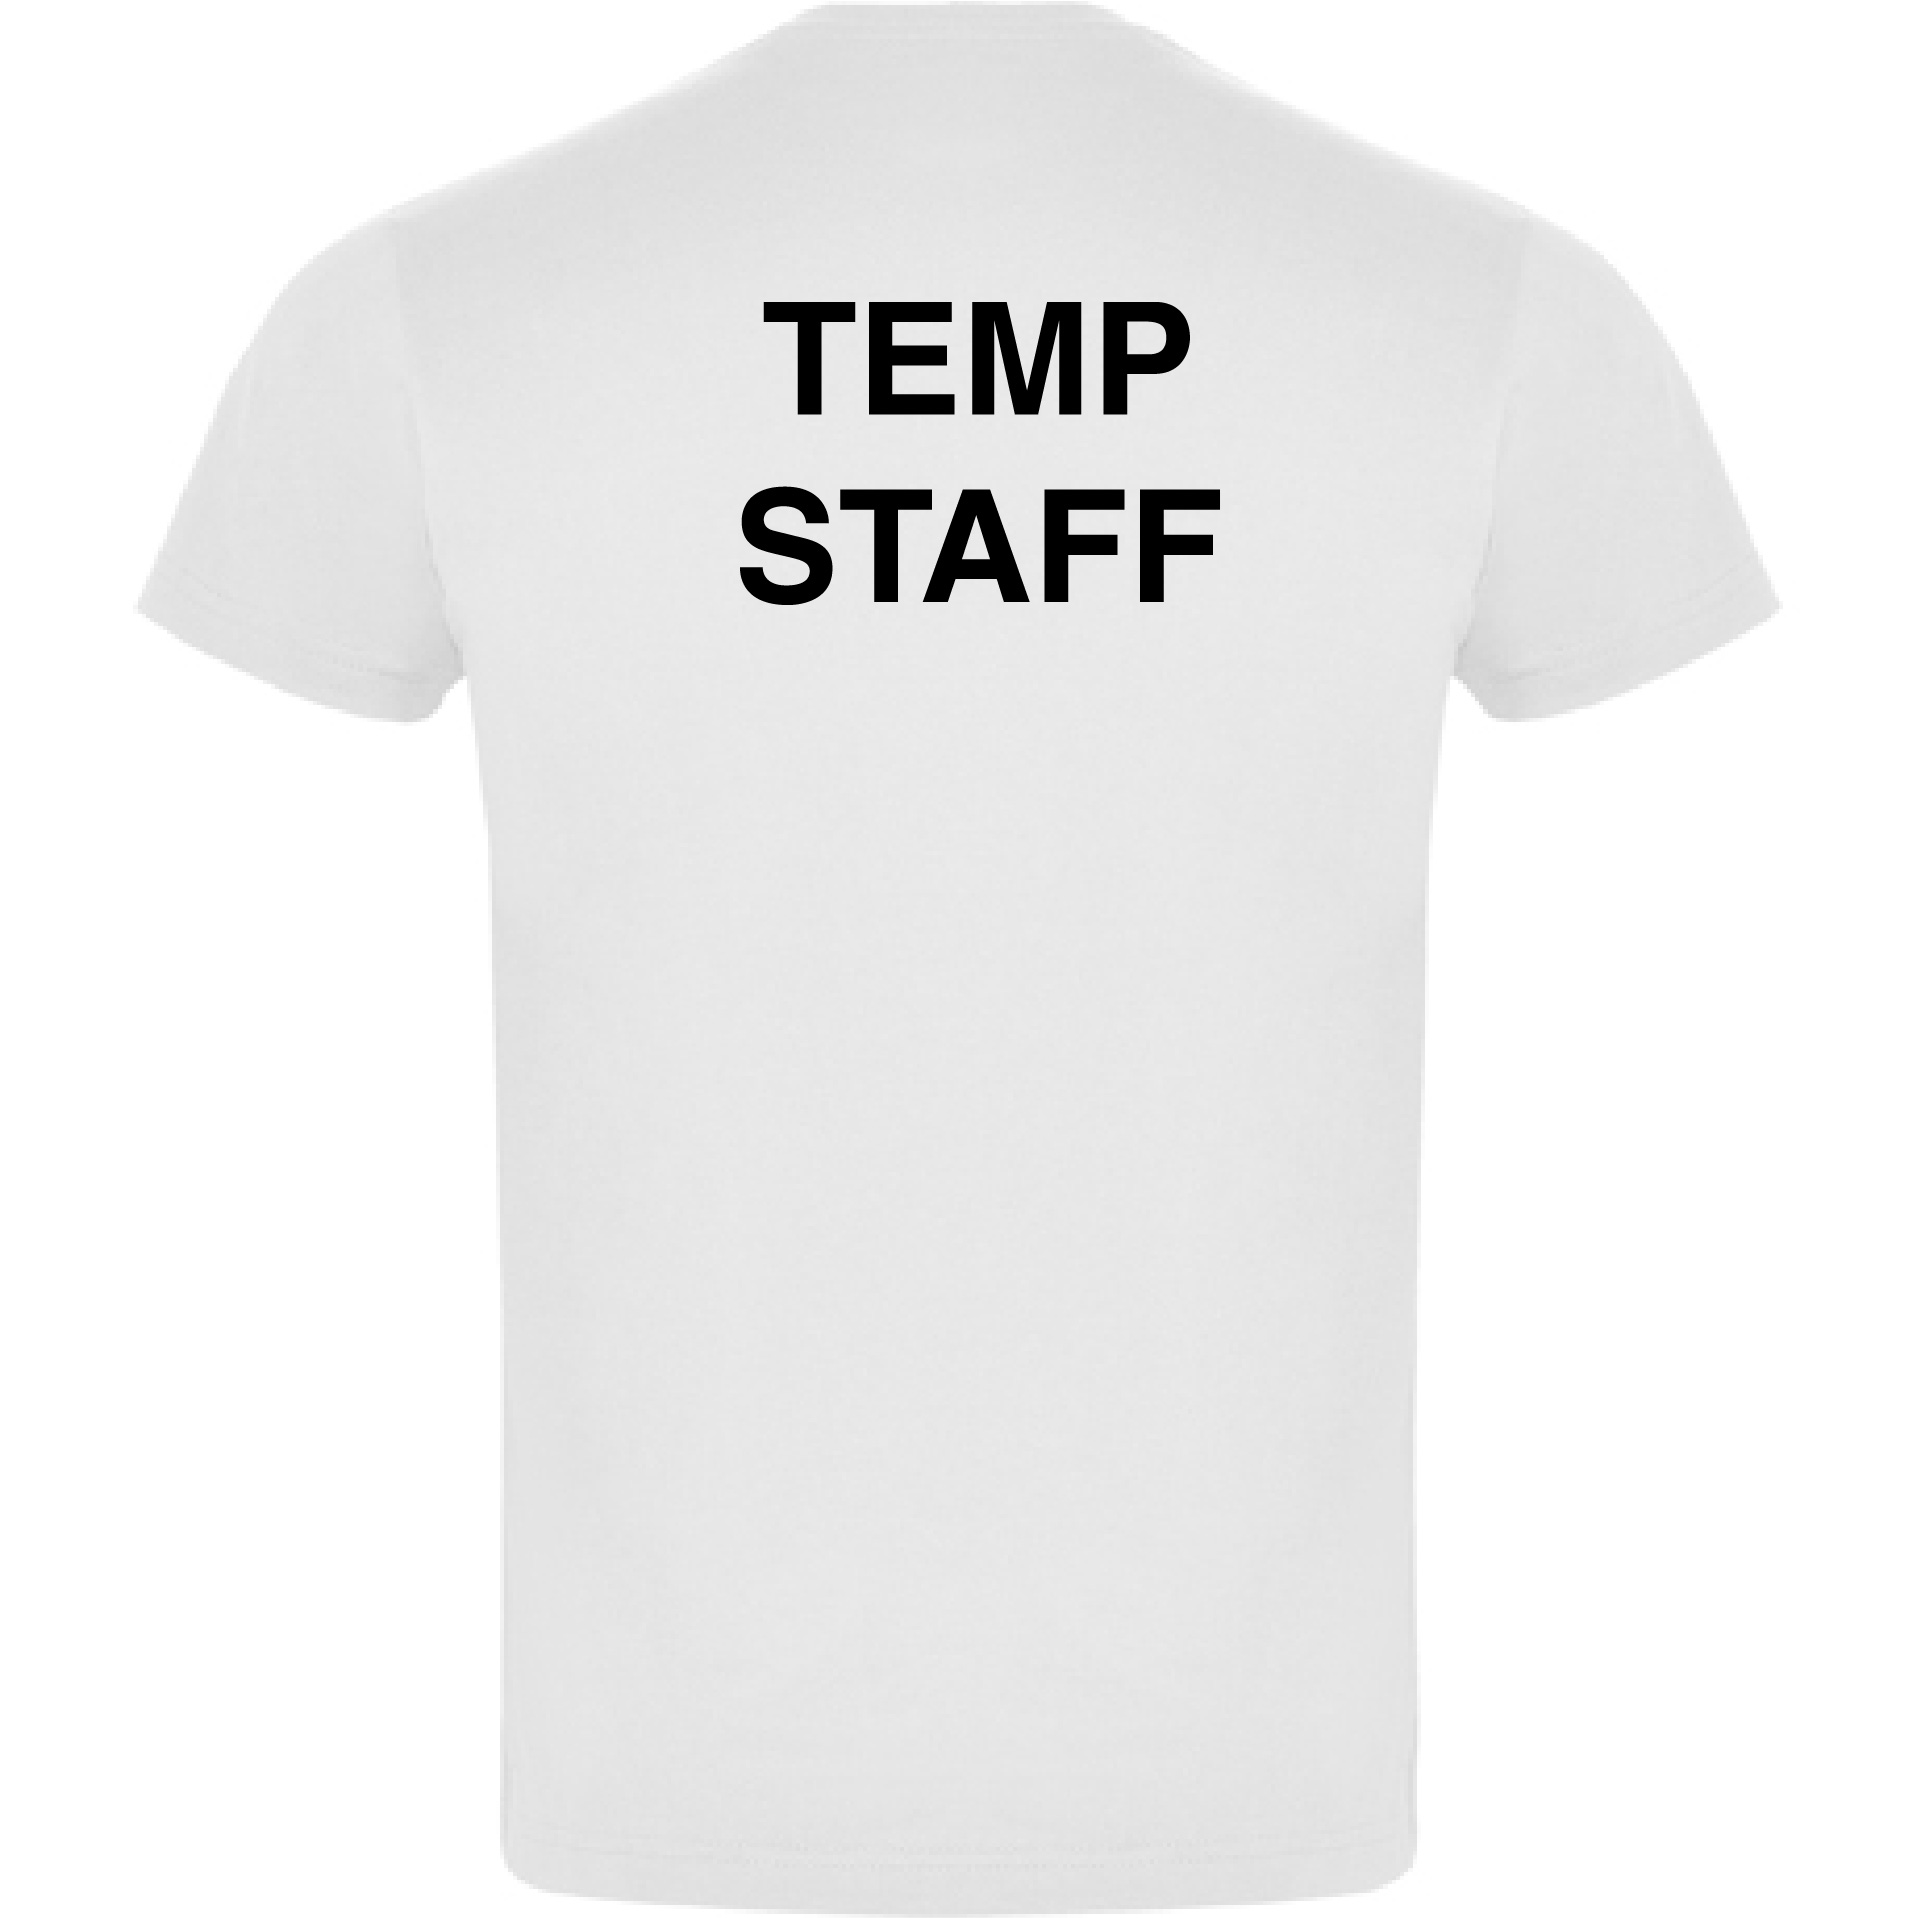 t-shirt_temp-staff_back_white.jpg